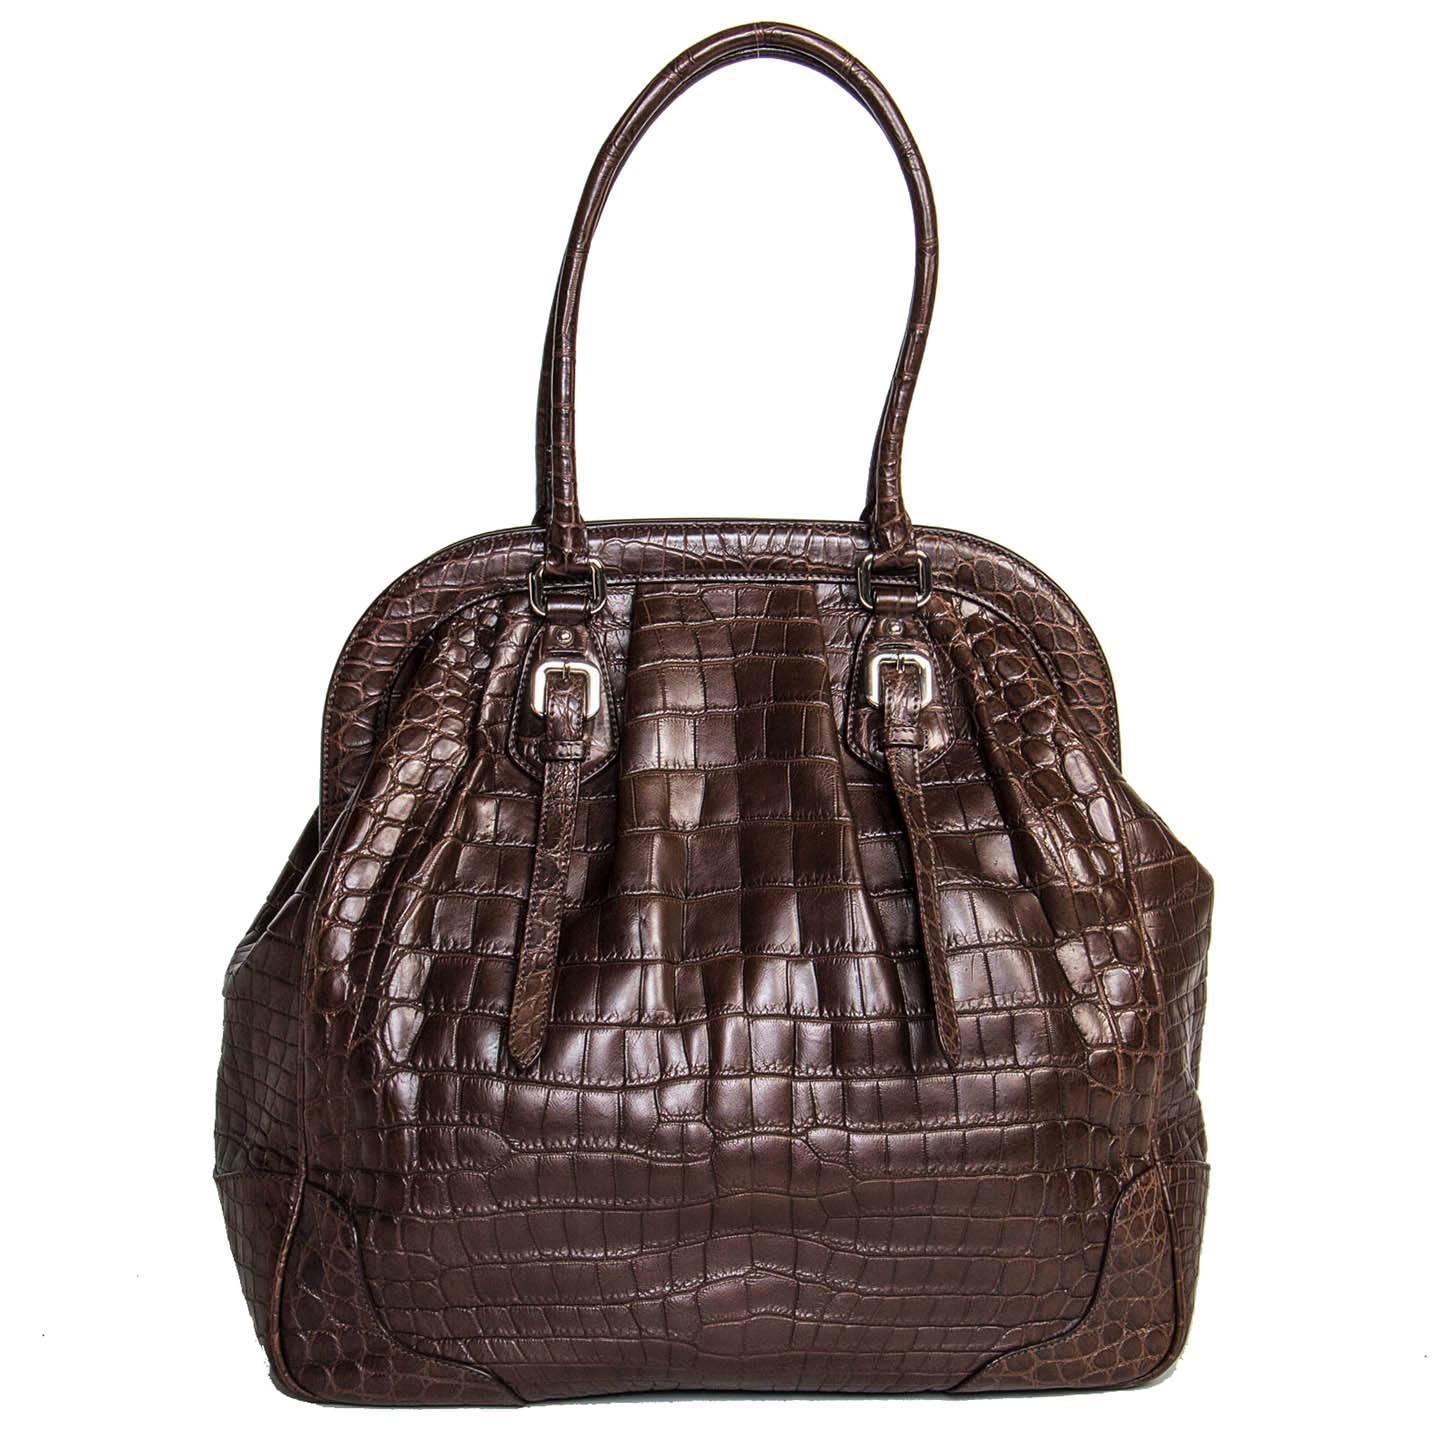 Prada Brown Crocodile Vintage Style Bag For Sale at 1stdibs